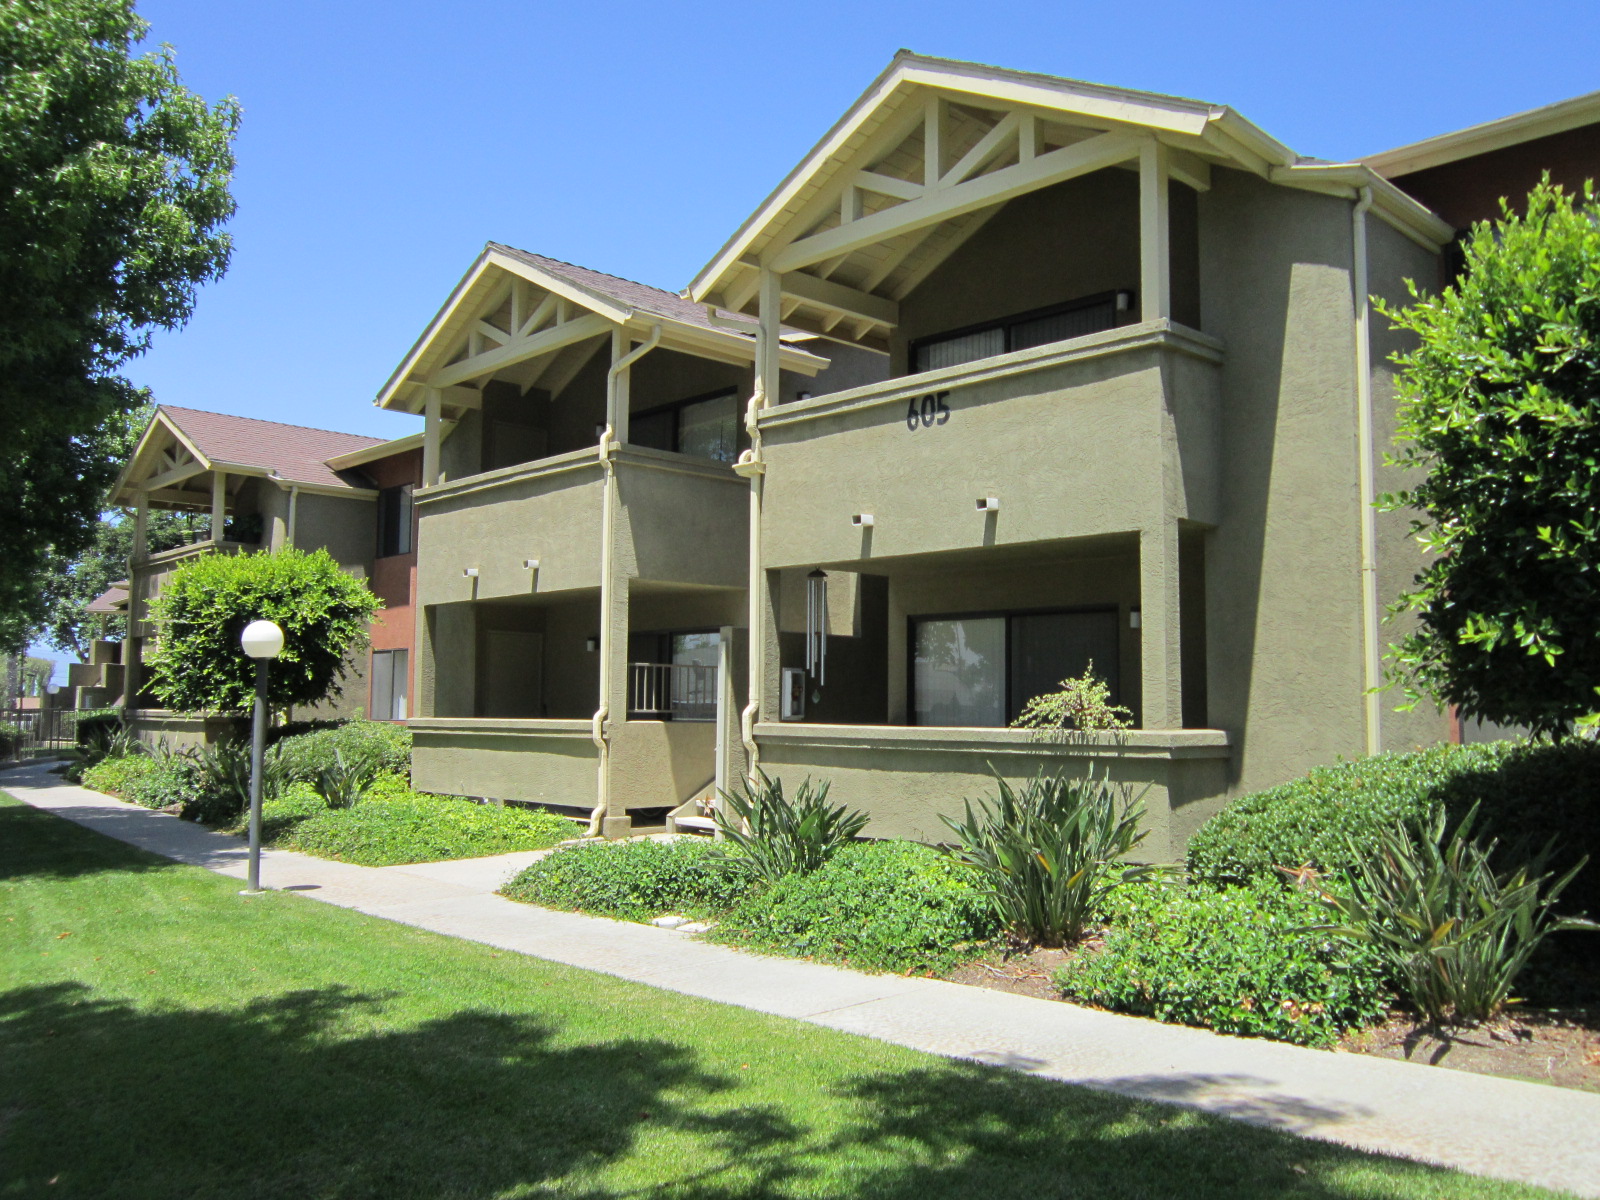 Sold - Windsong Apartments - Chula Vista, Ca.